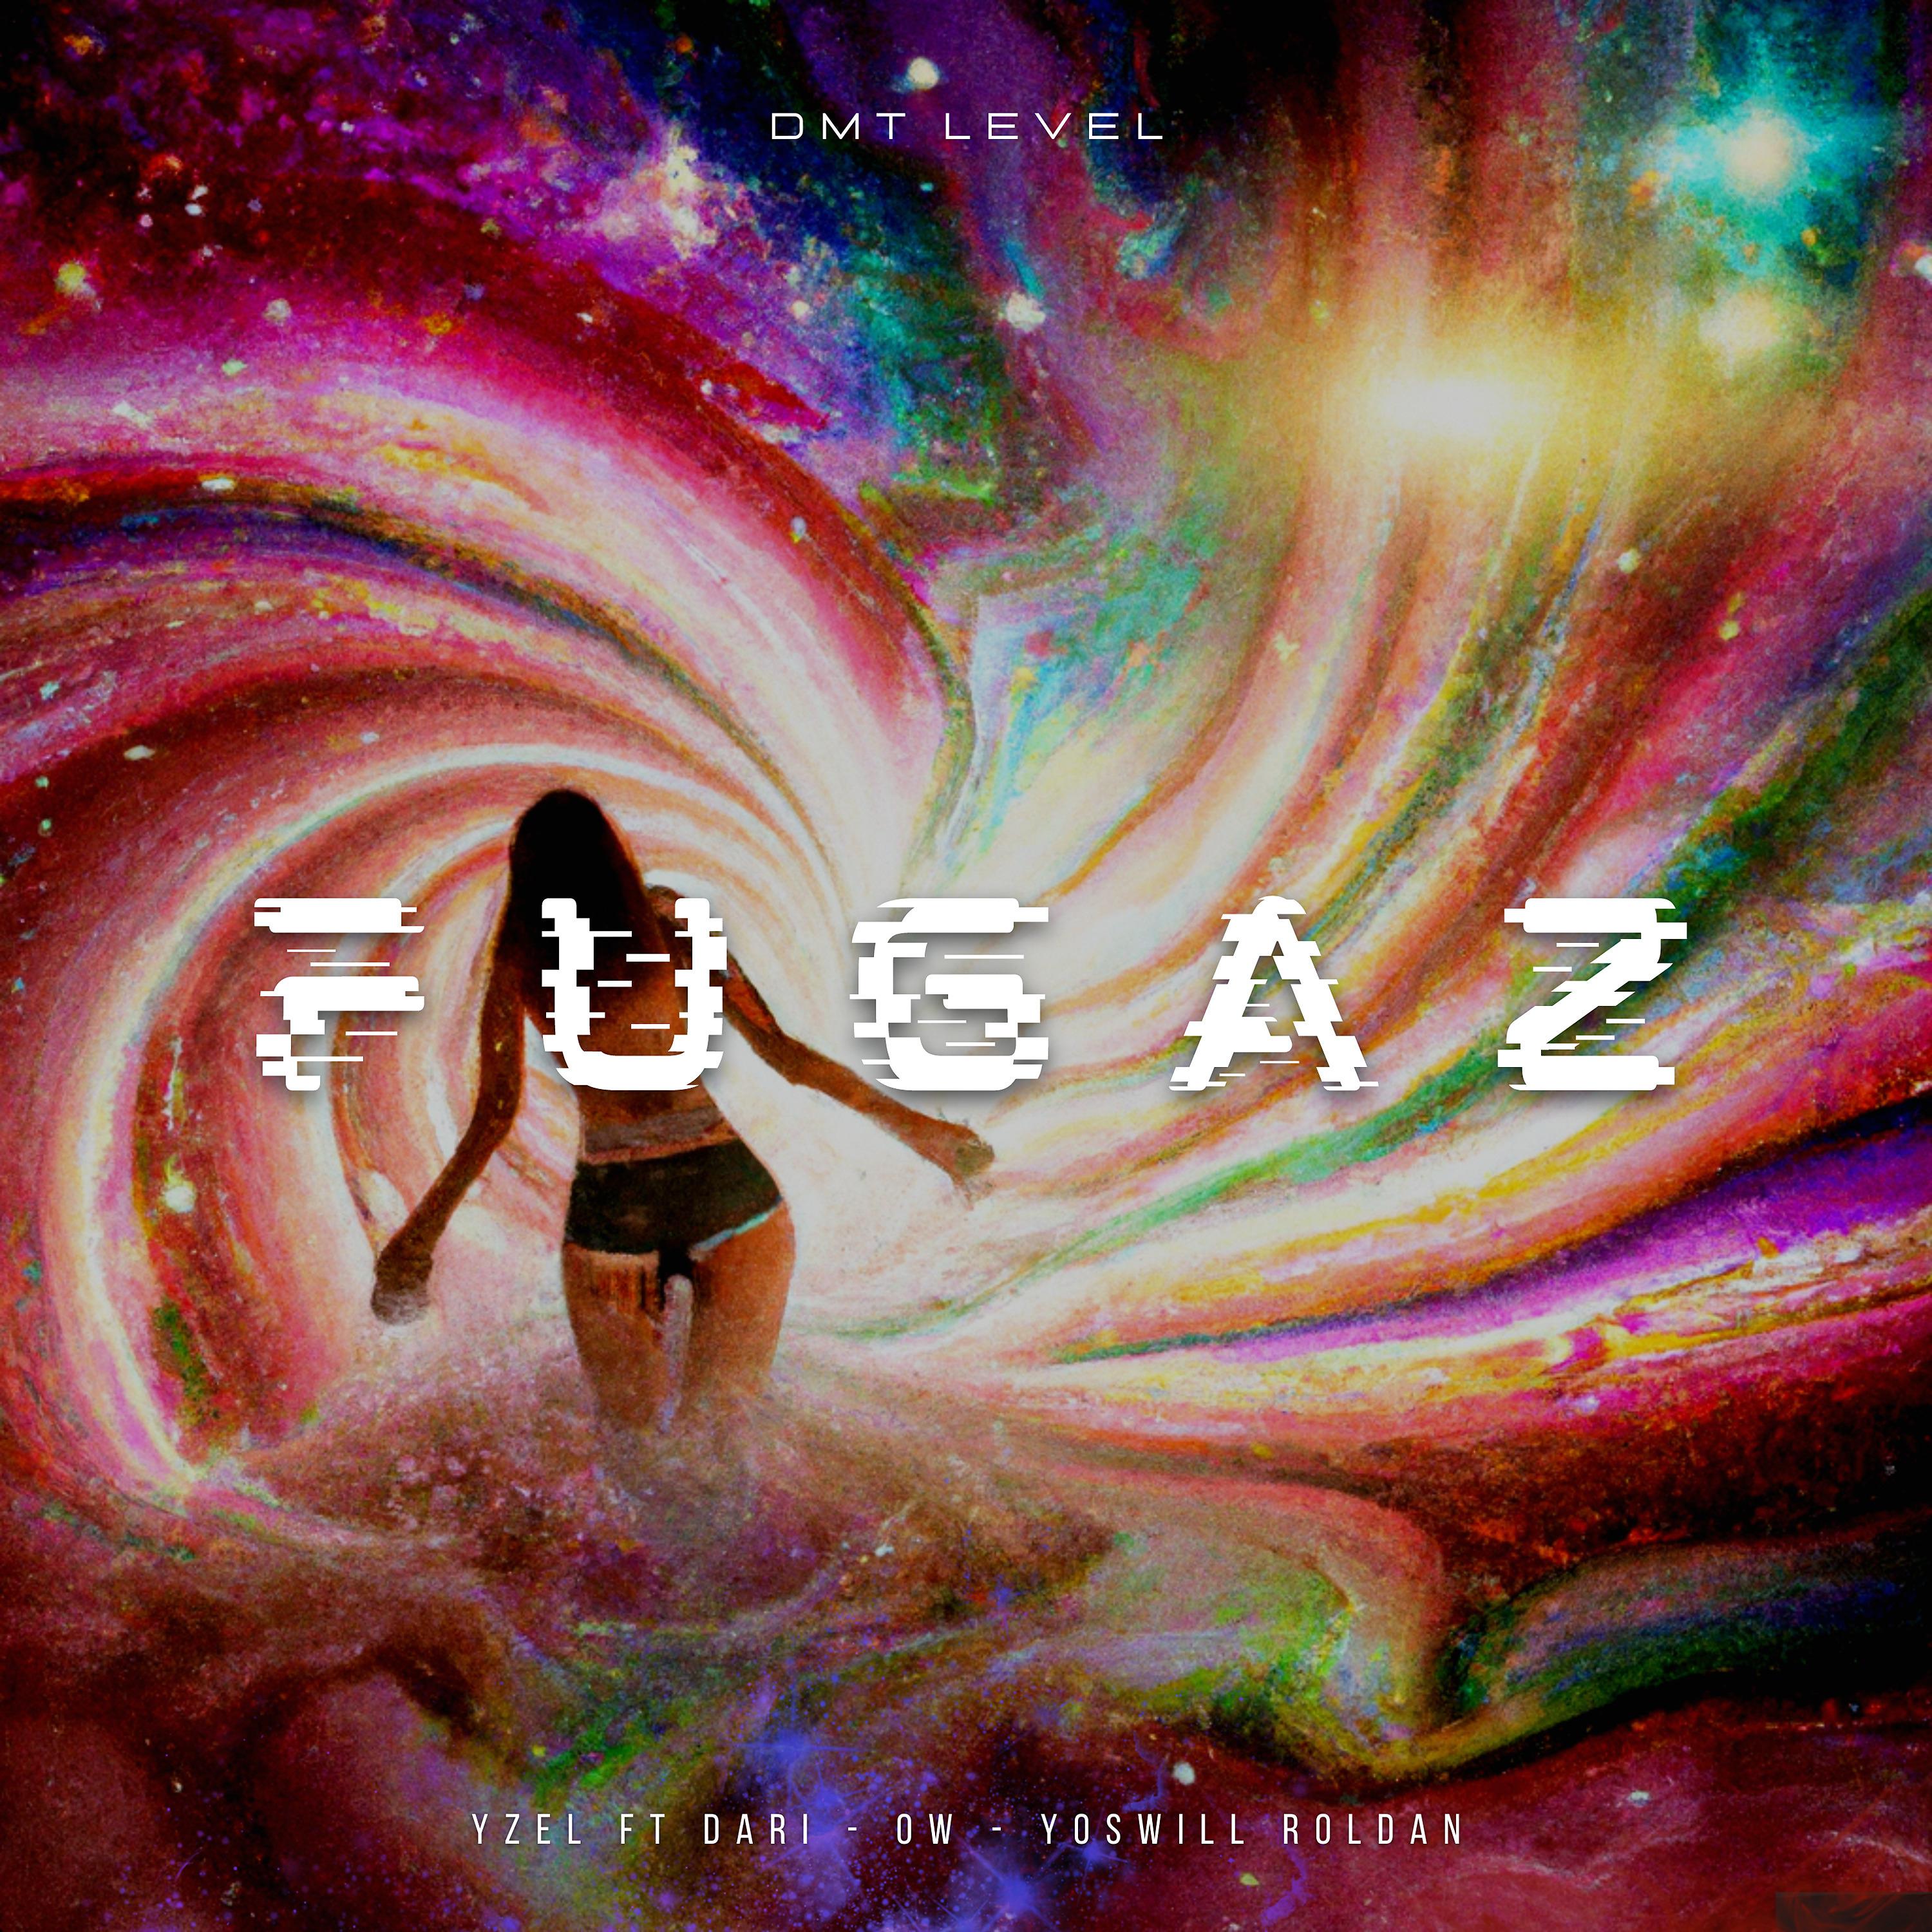 Постер альбома Fugaz